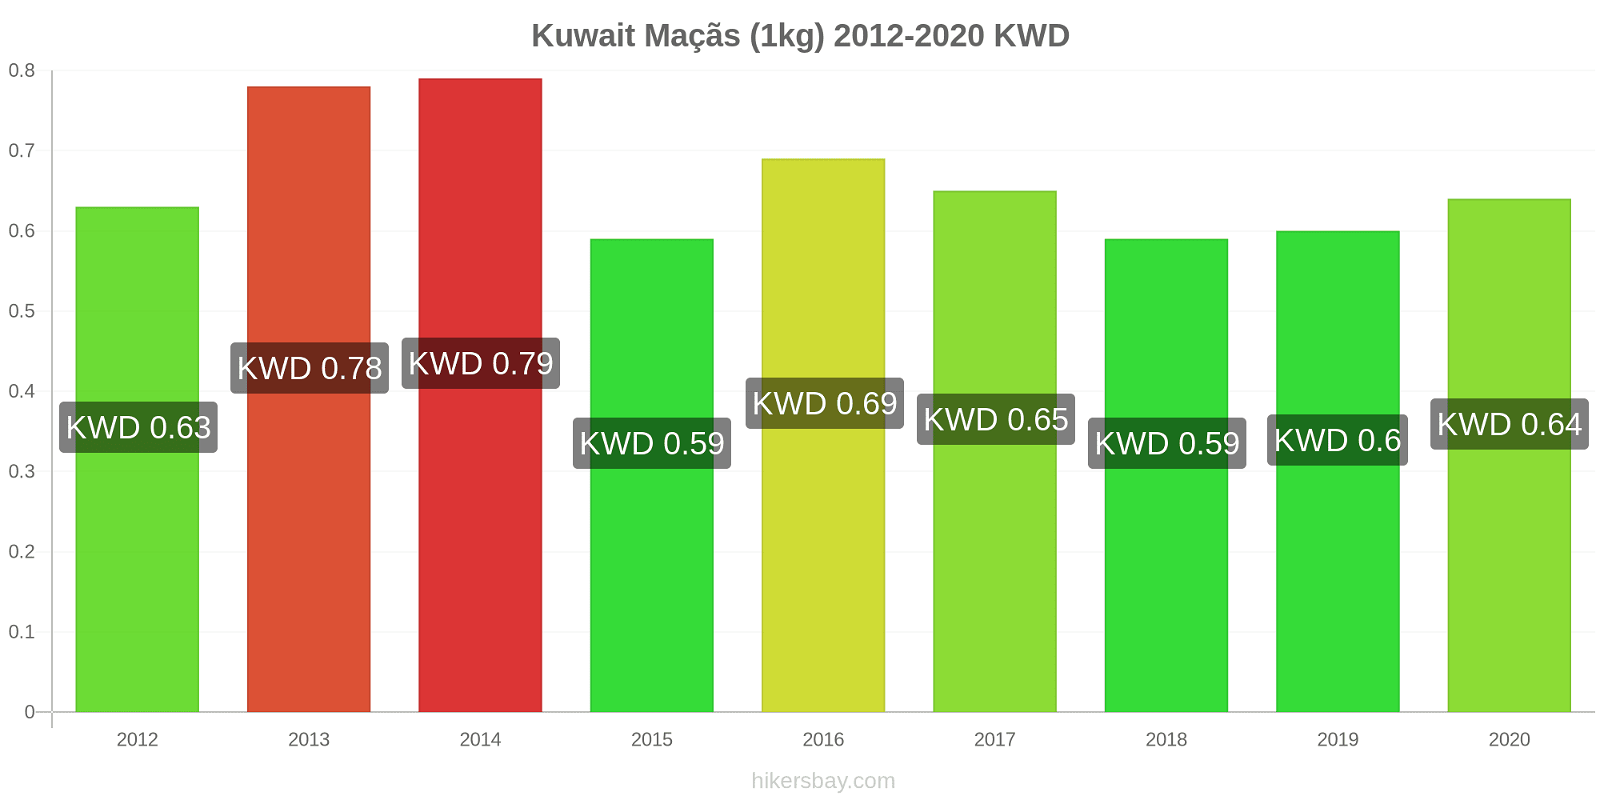 Kuwait variação de preço Maçãs (1kg) hikersbay.com